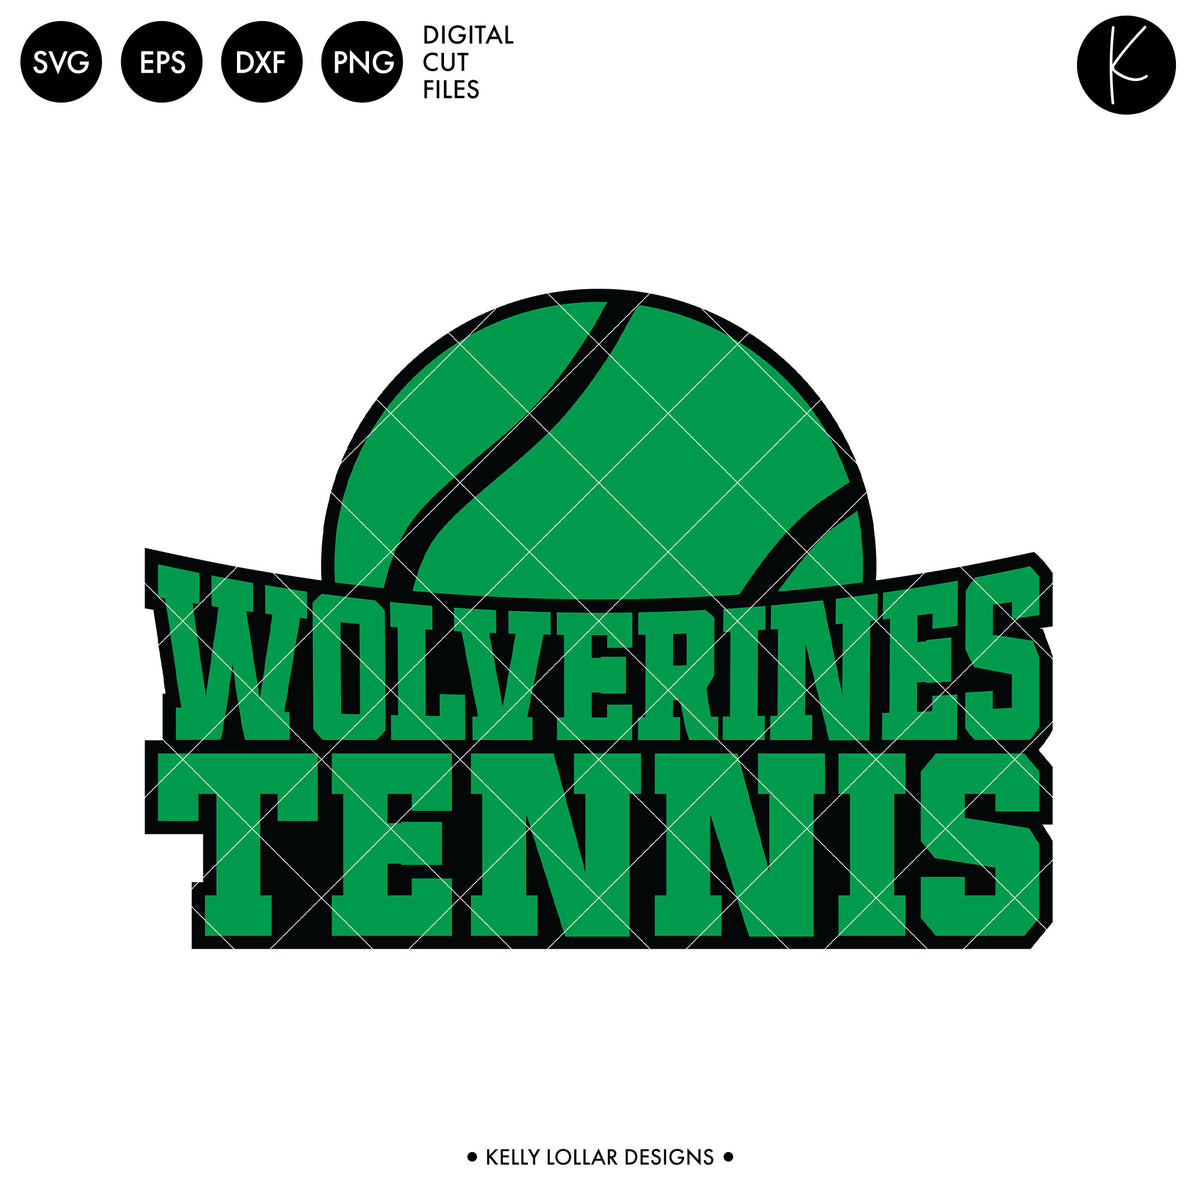 Wolverines Tennis Bundle | SVG DXF EPS PNG Cut Files